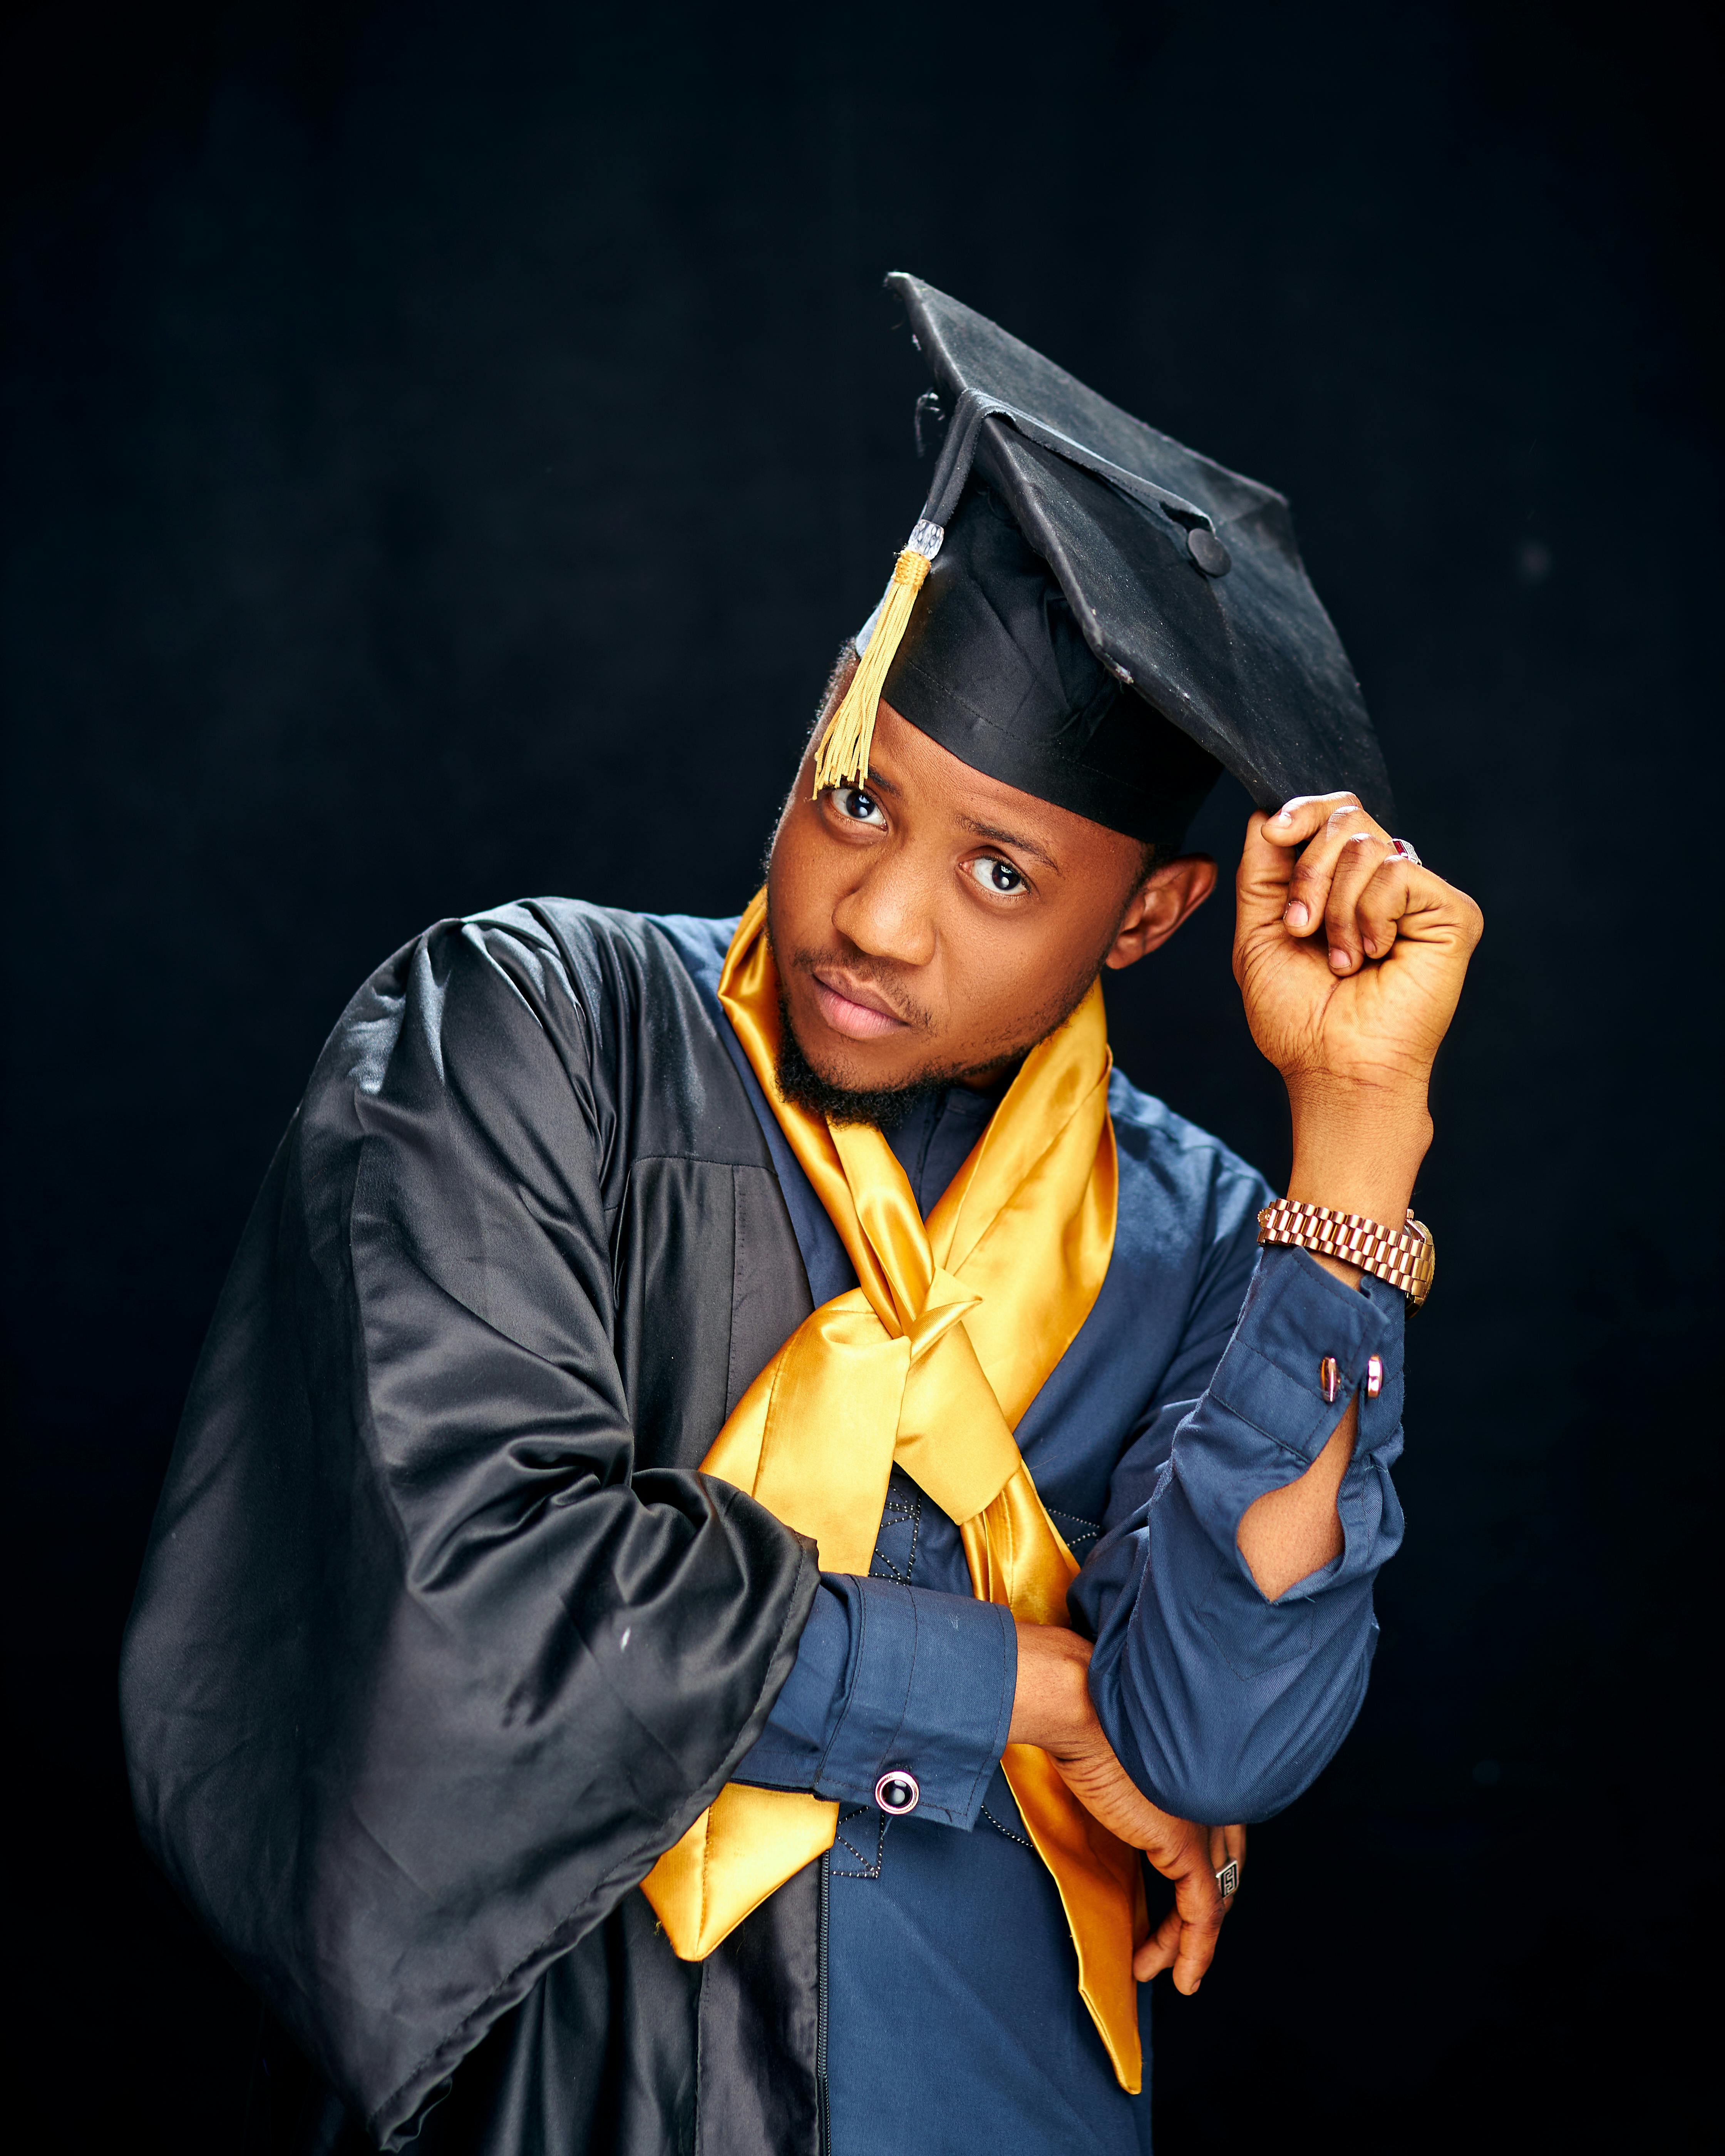 Kid Wearing Graduation Gown · Free Stock Photo